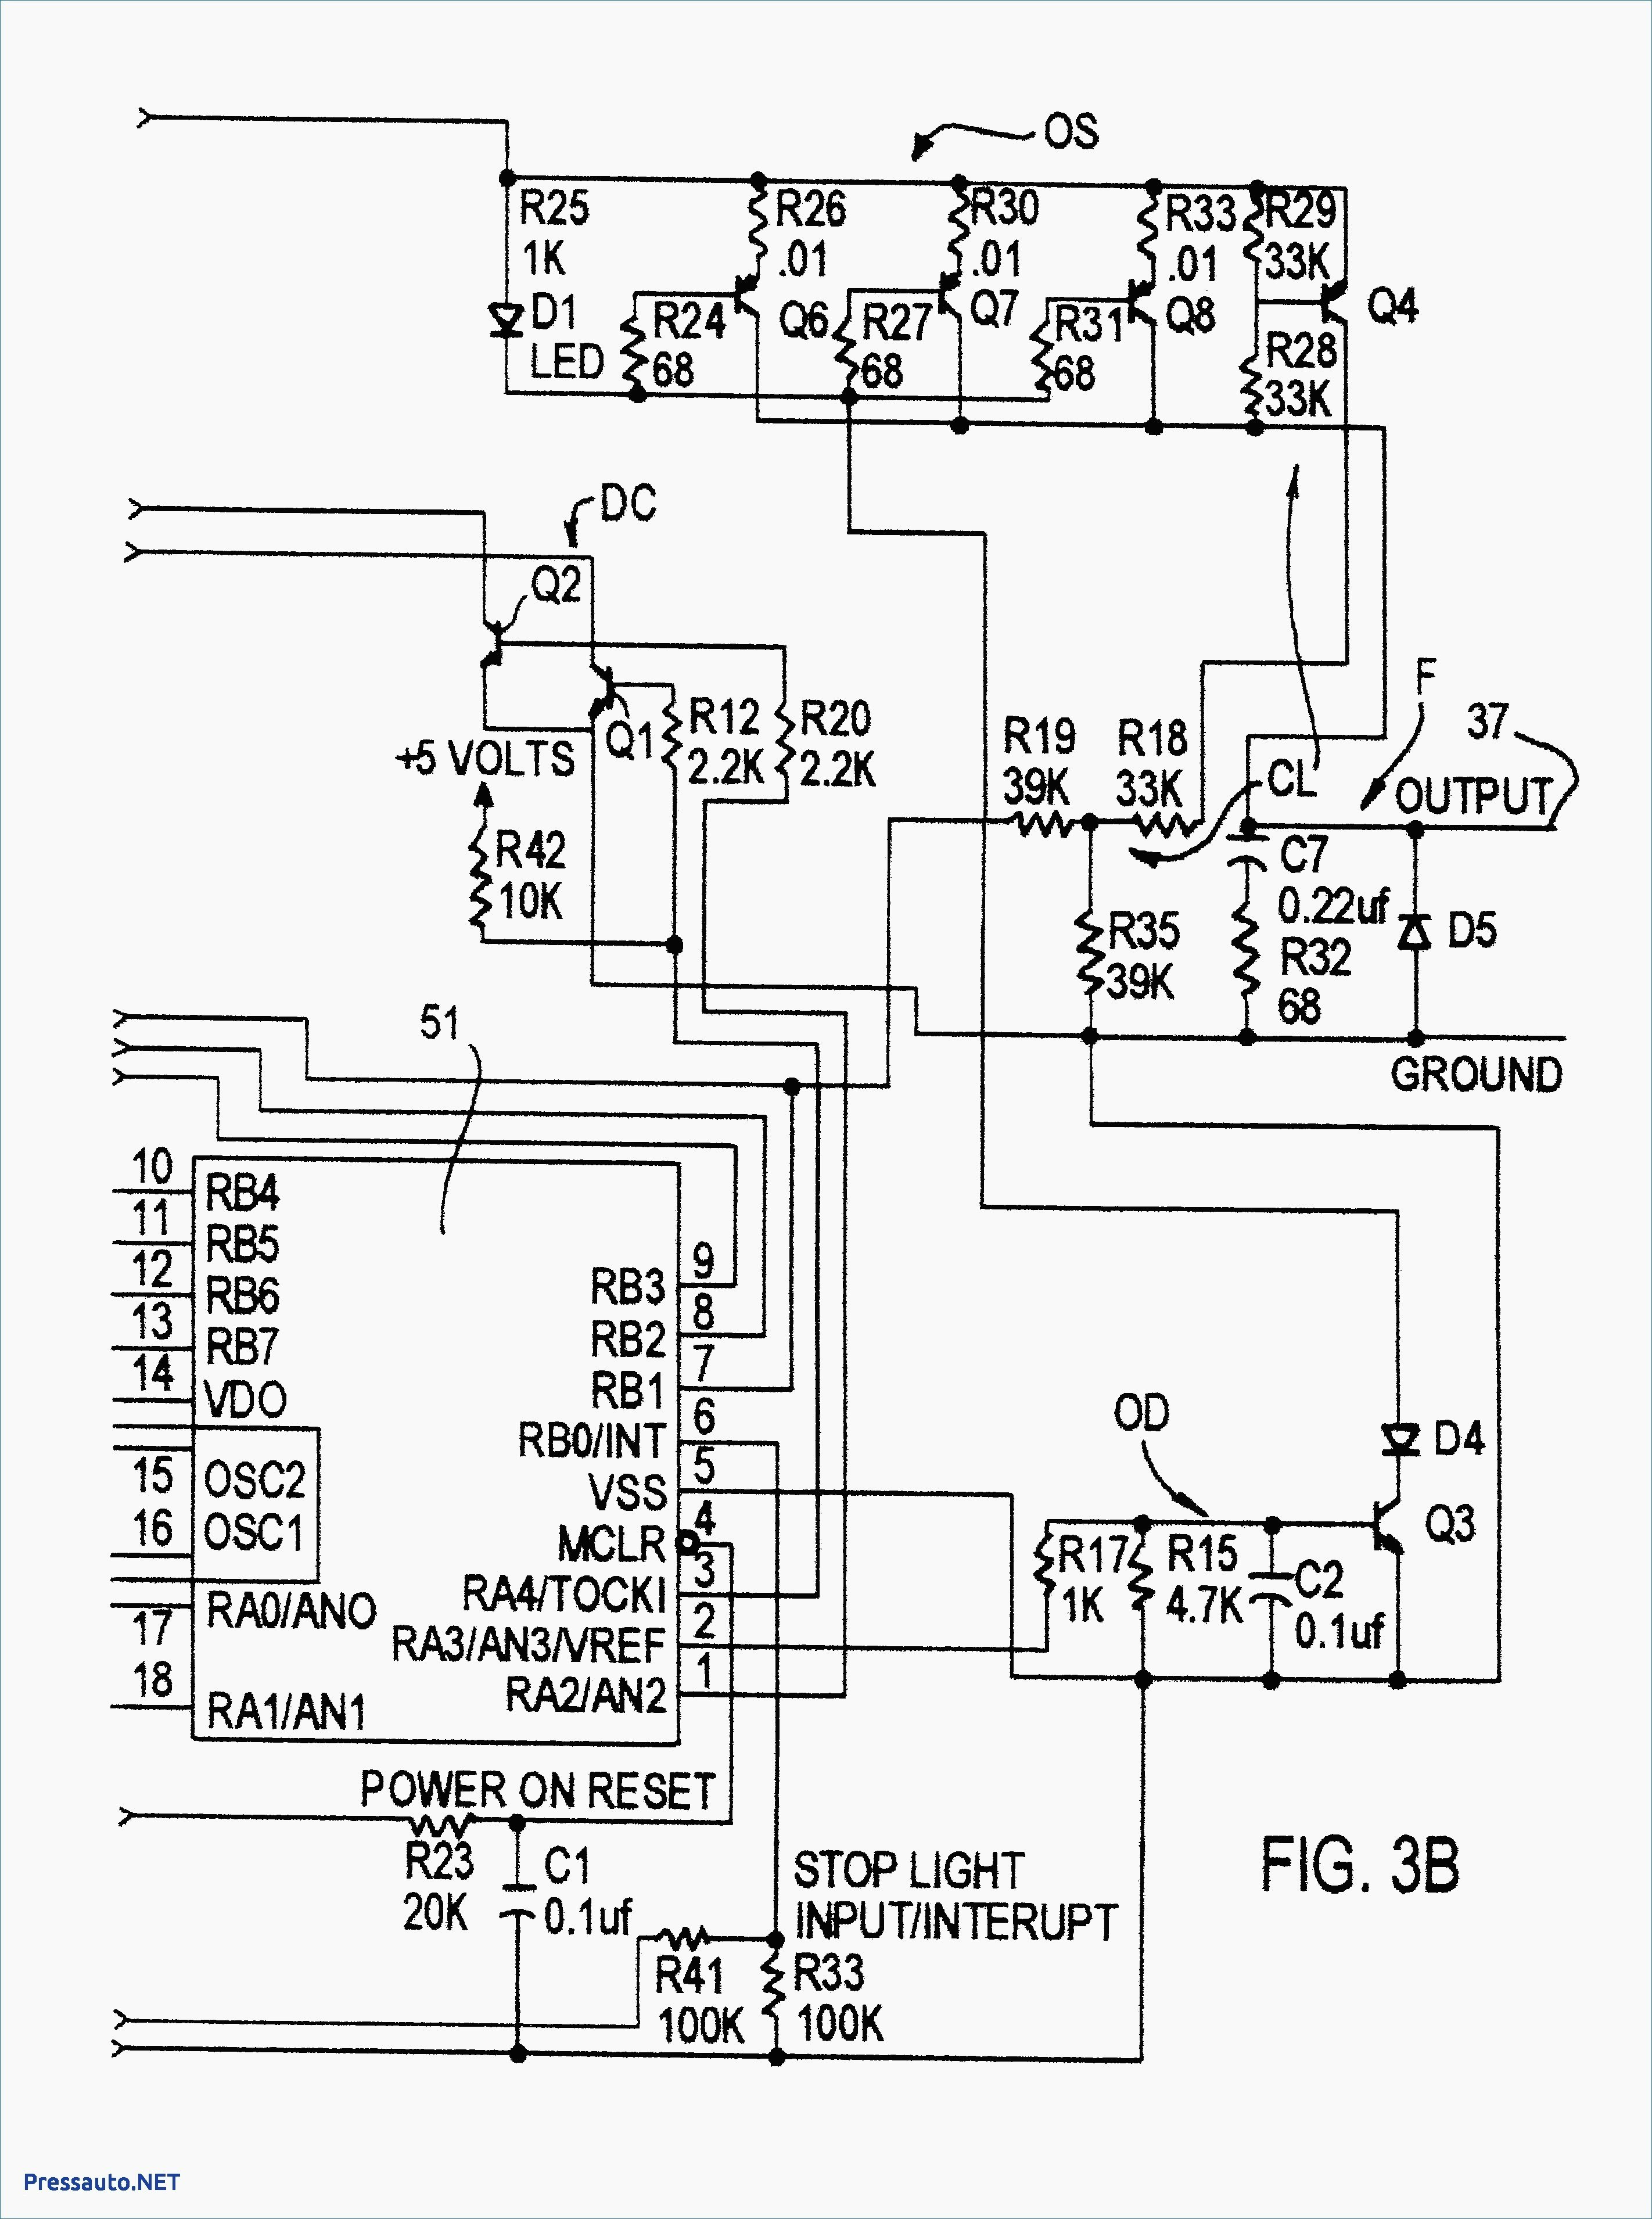 Wfco Converter Wiring Diagram | Wiring Diagram - Wfco 8955 Wiring Diagram